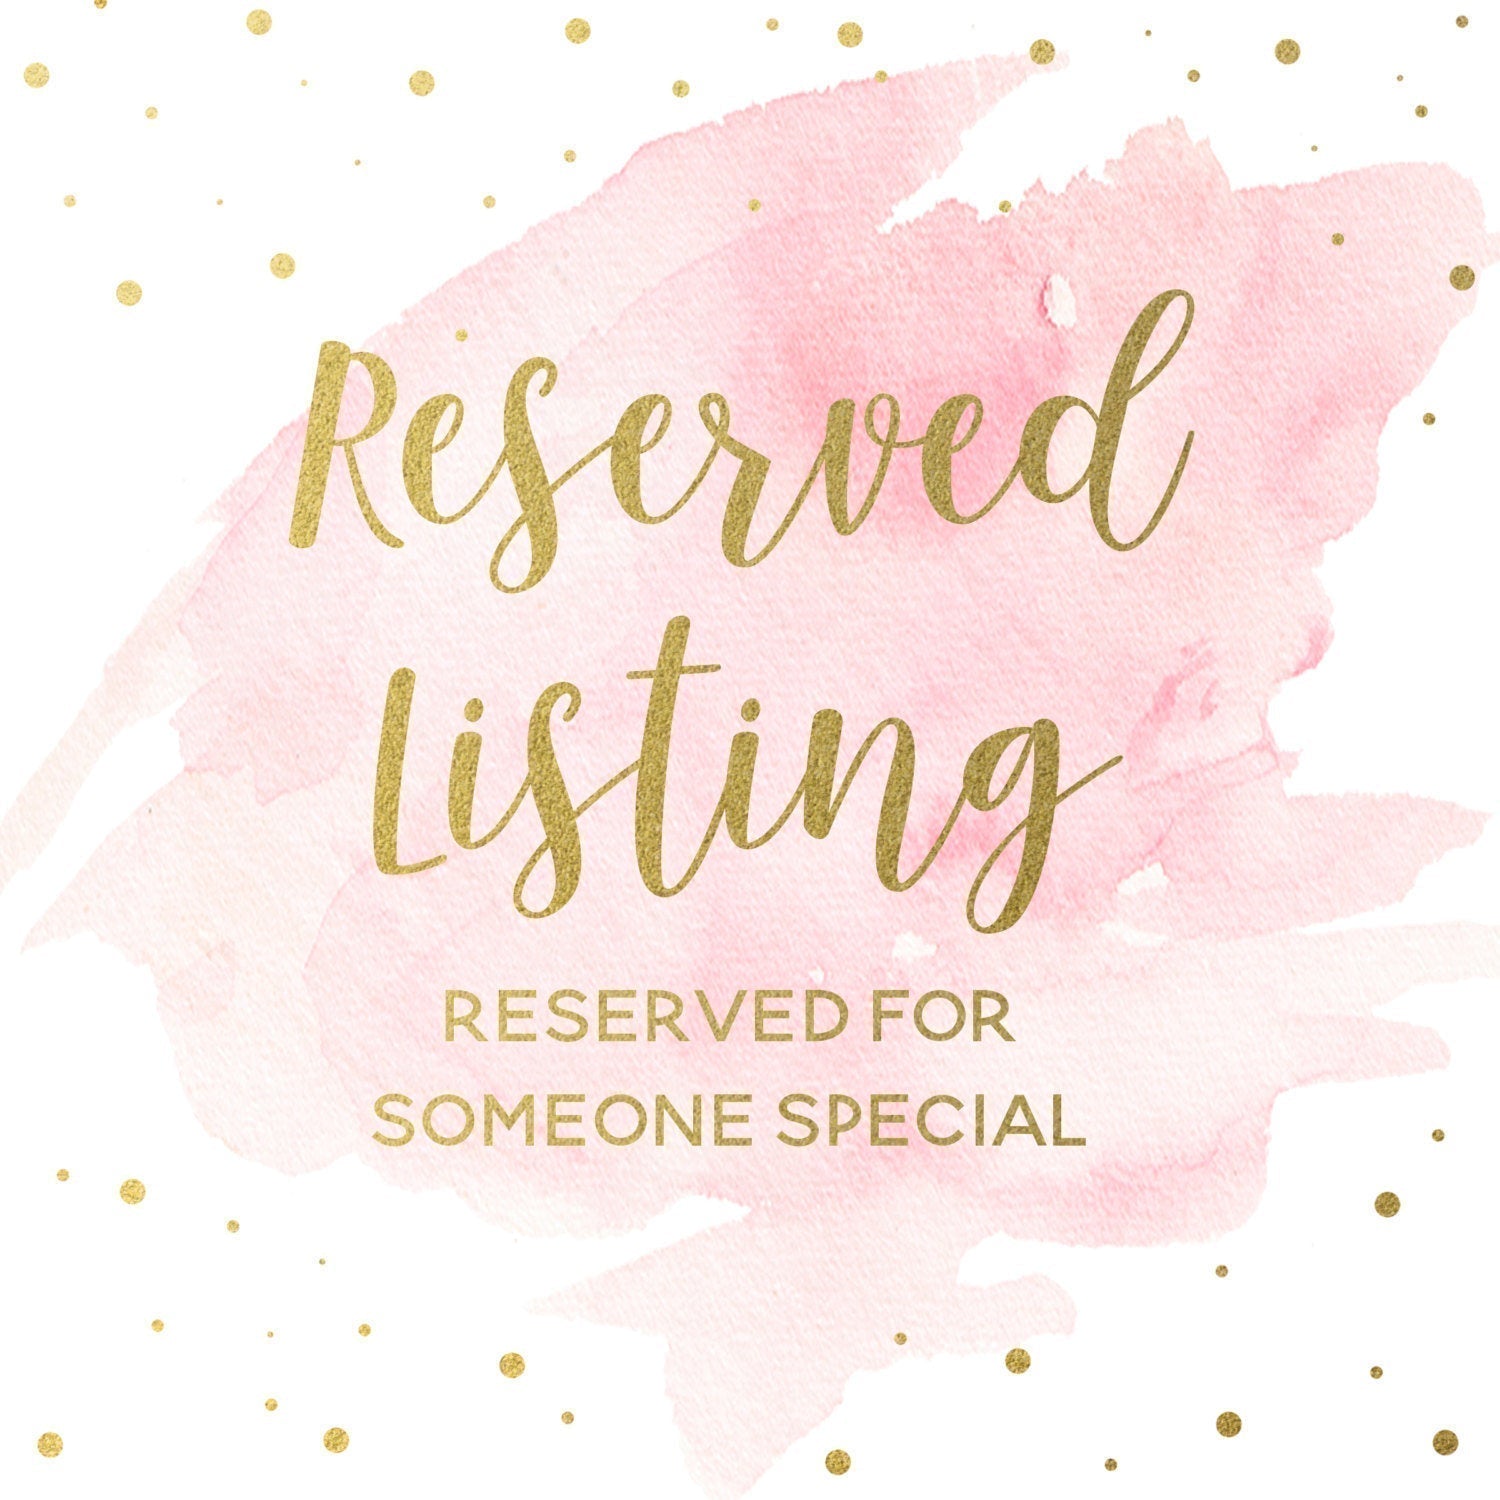 Reserved Listing - J Stella